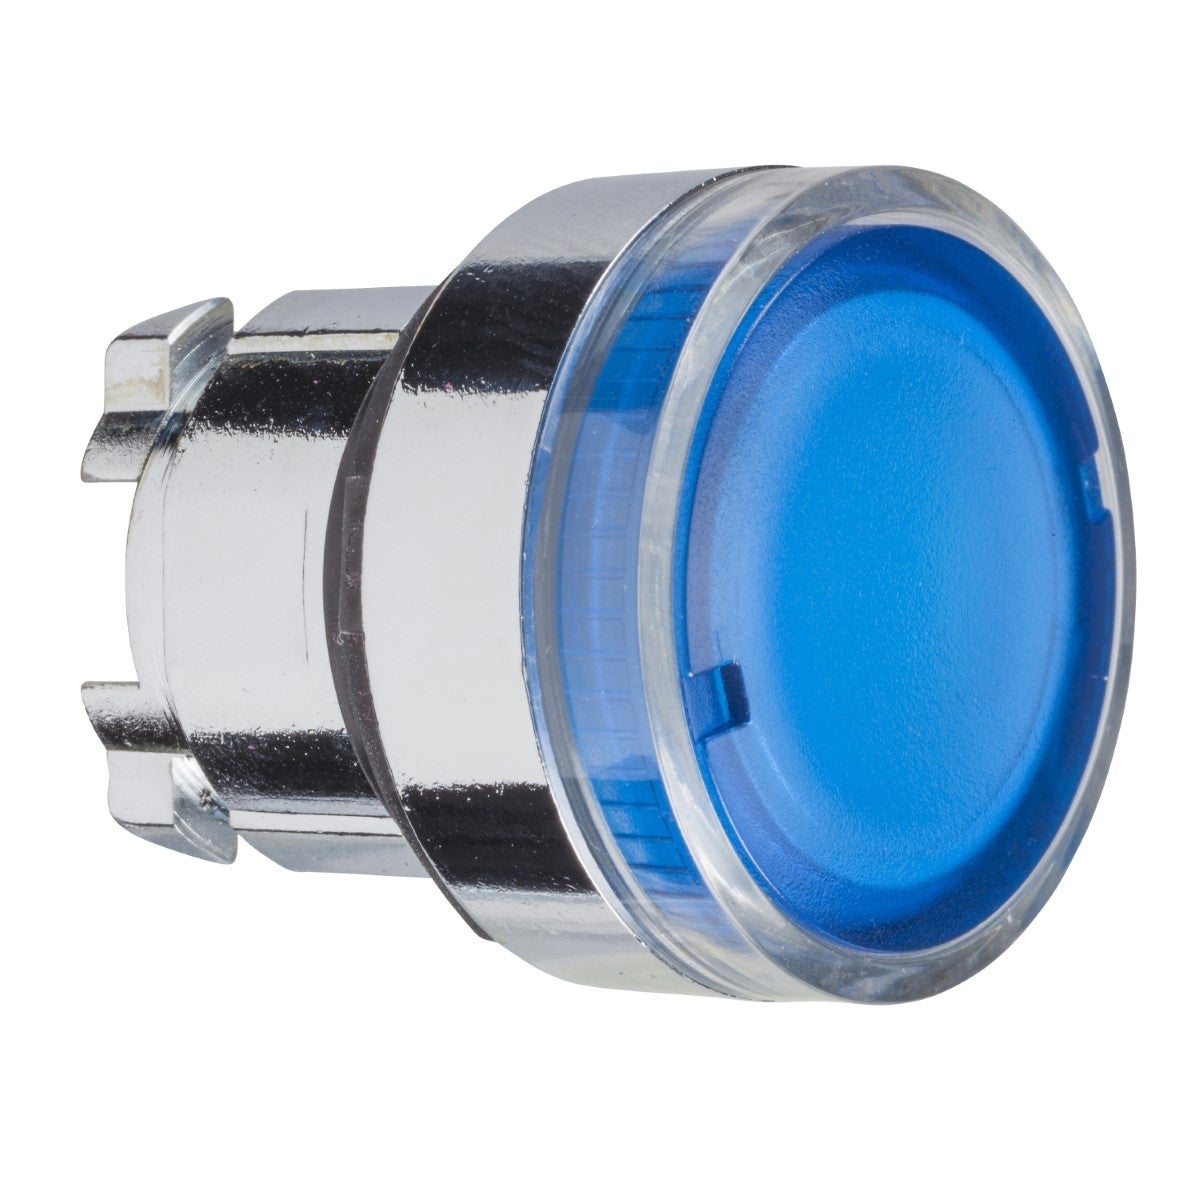 Illuminated push button head, Harmony XB4, metal, flush, blue, 22mm, spring return, plain lens for BA9s bulb